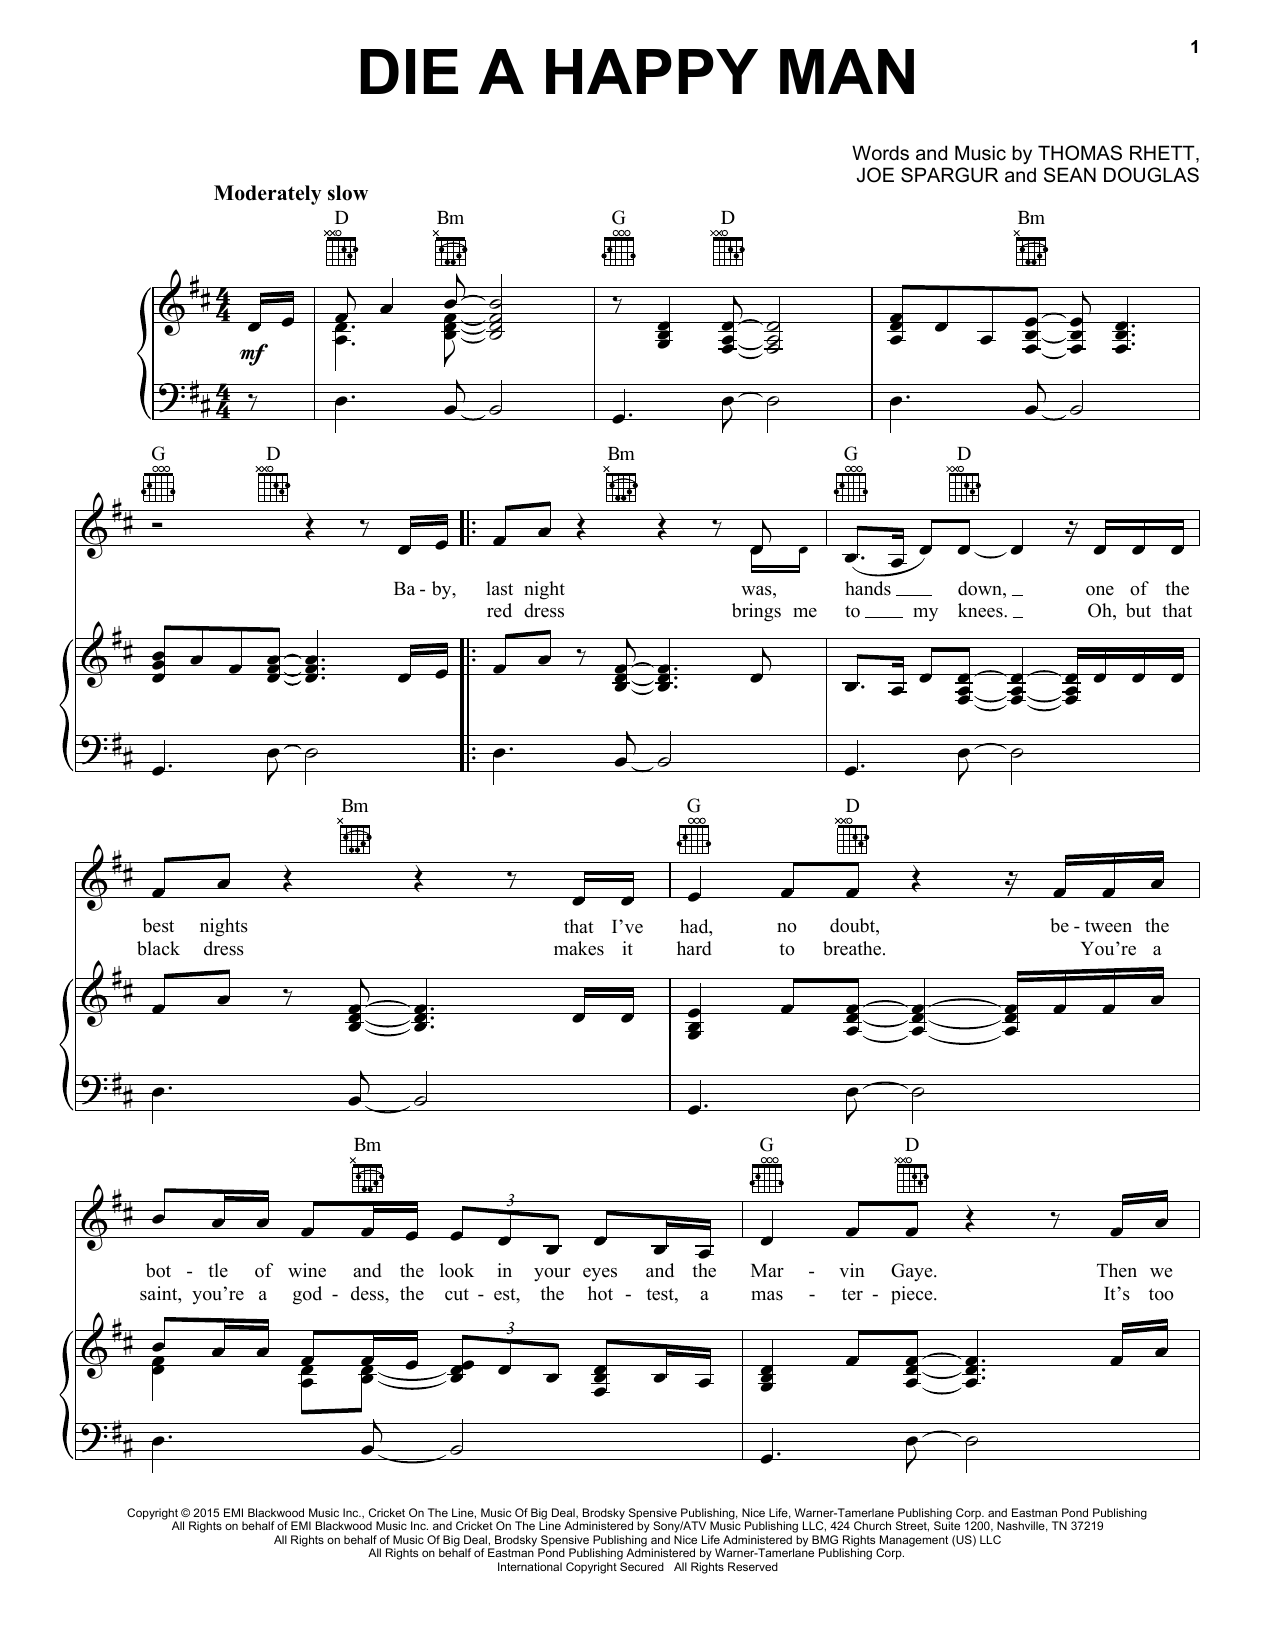 Thomas Rhett Die A Happy Man Sheet Music Notes & Chords for Solo Guitar - Download or Print PDF